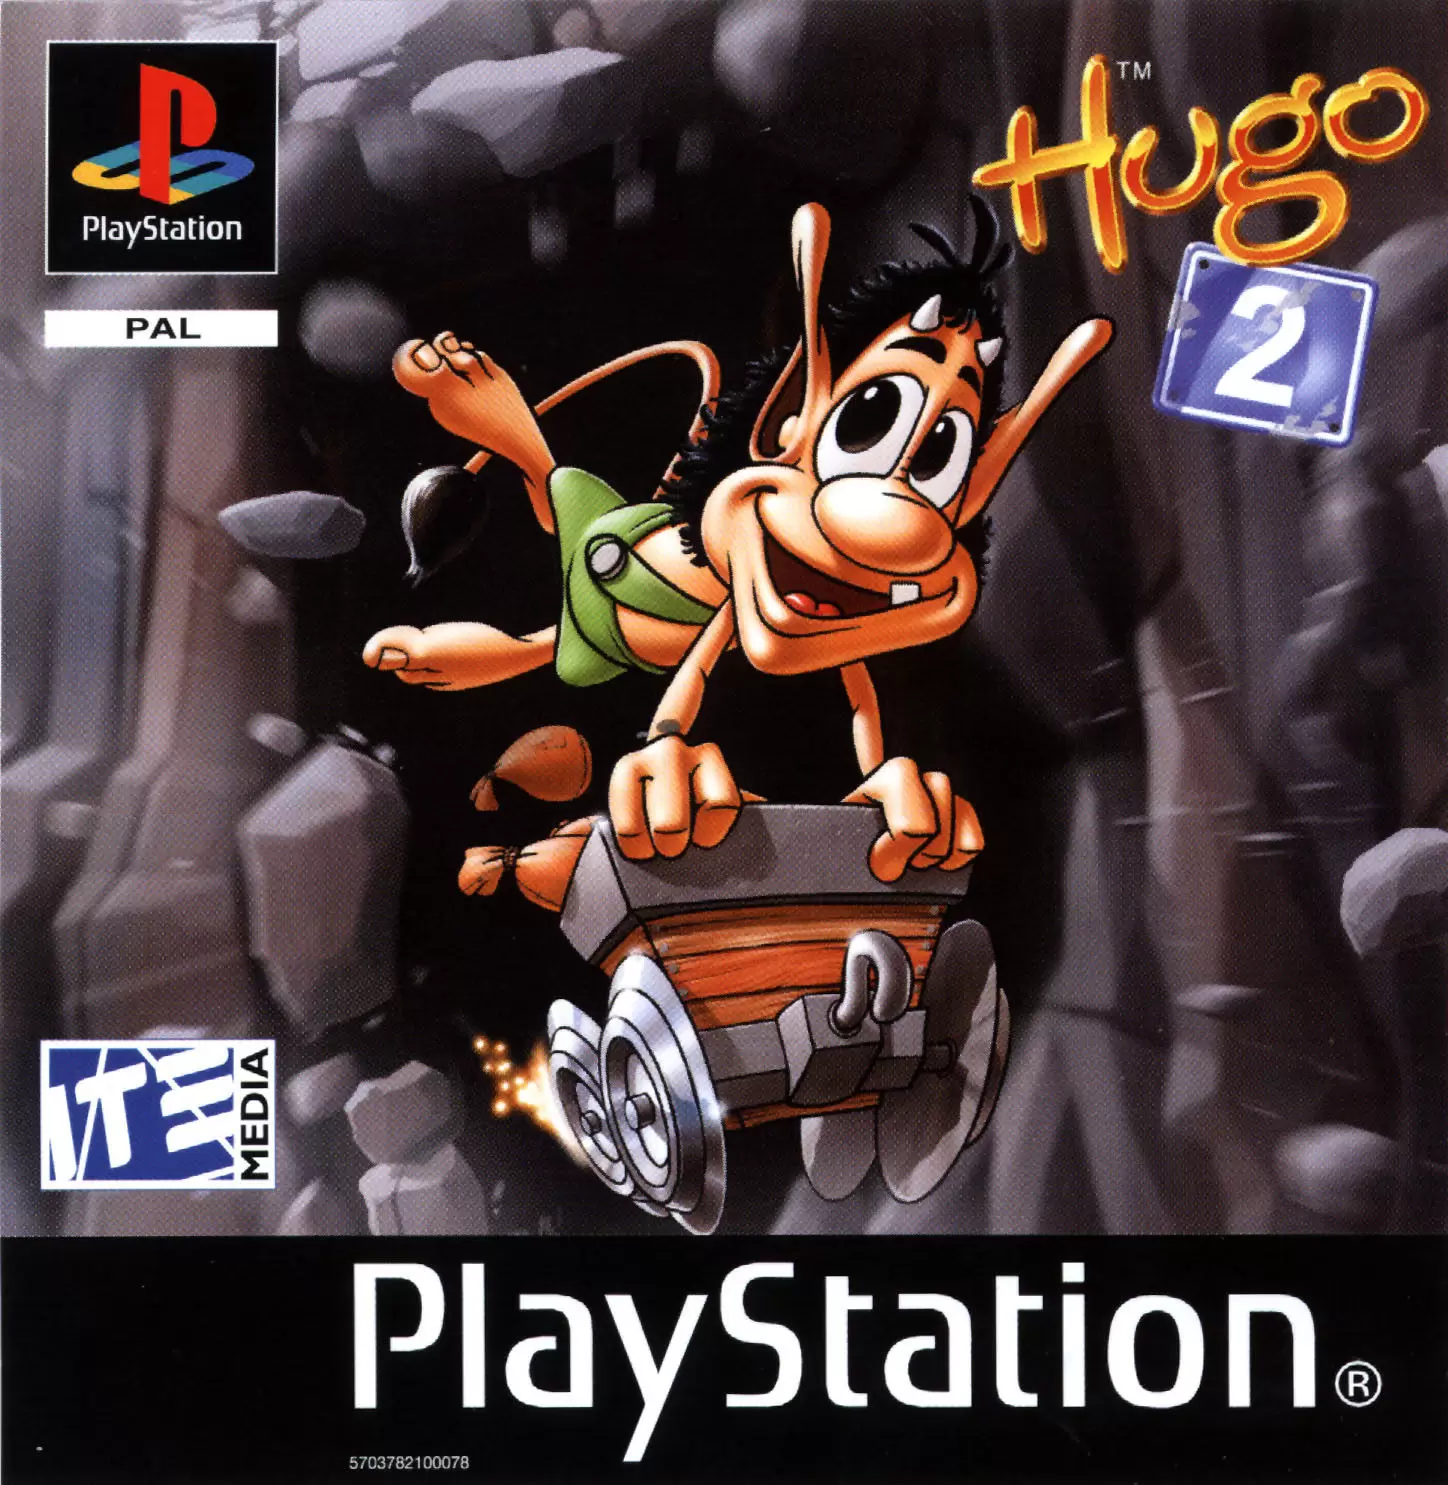 Playstation games - Hugo 2